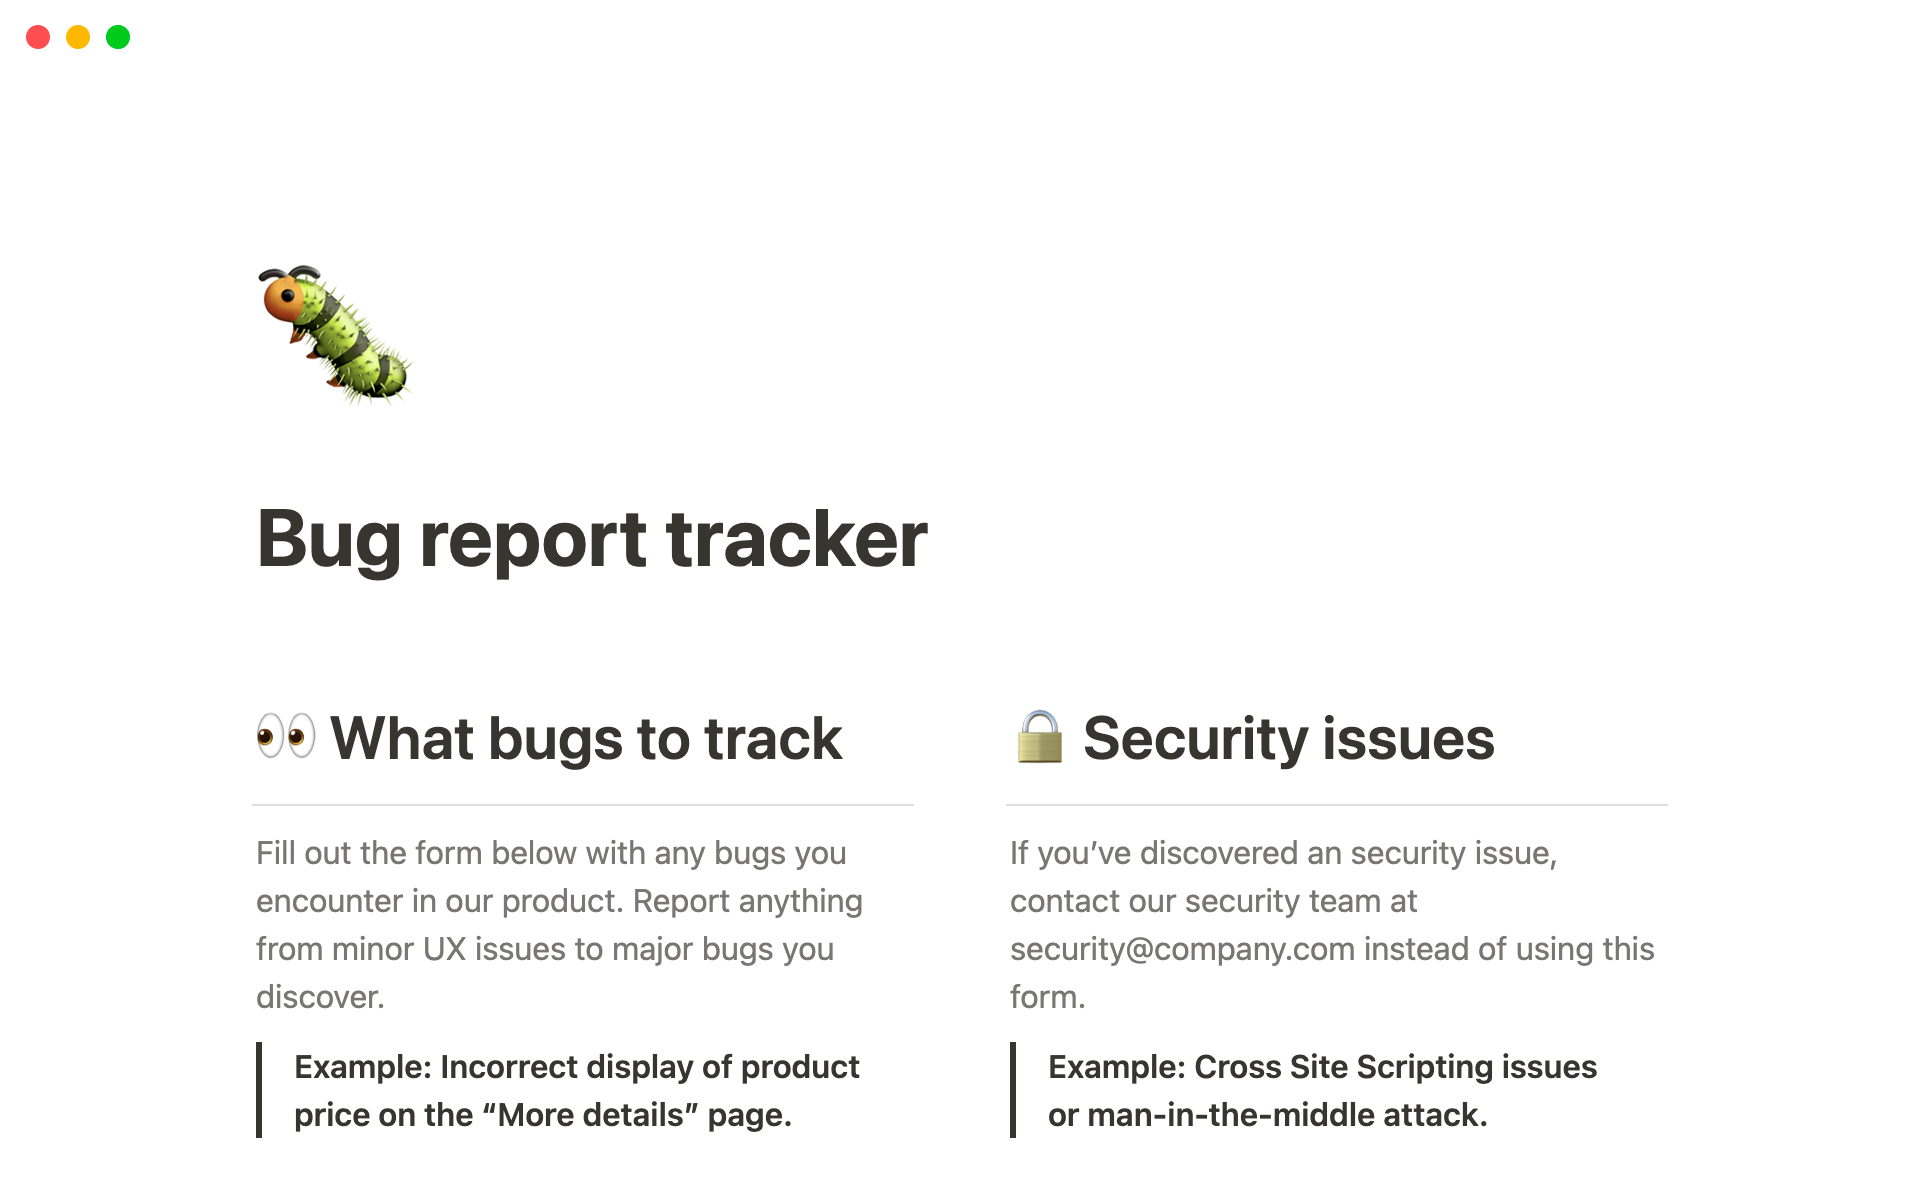 Aperçu du modèle de Bug report tracker